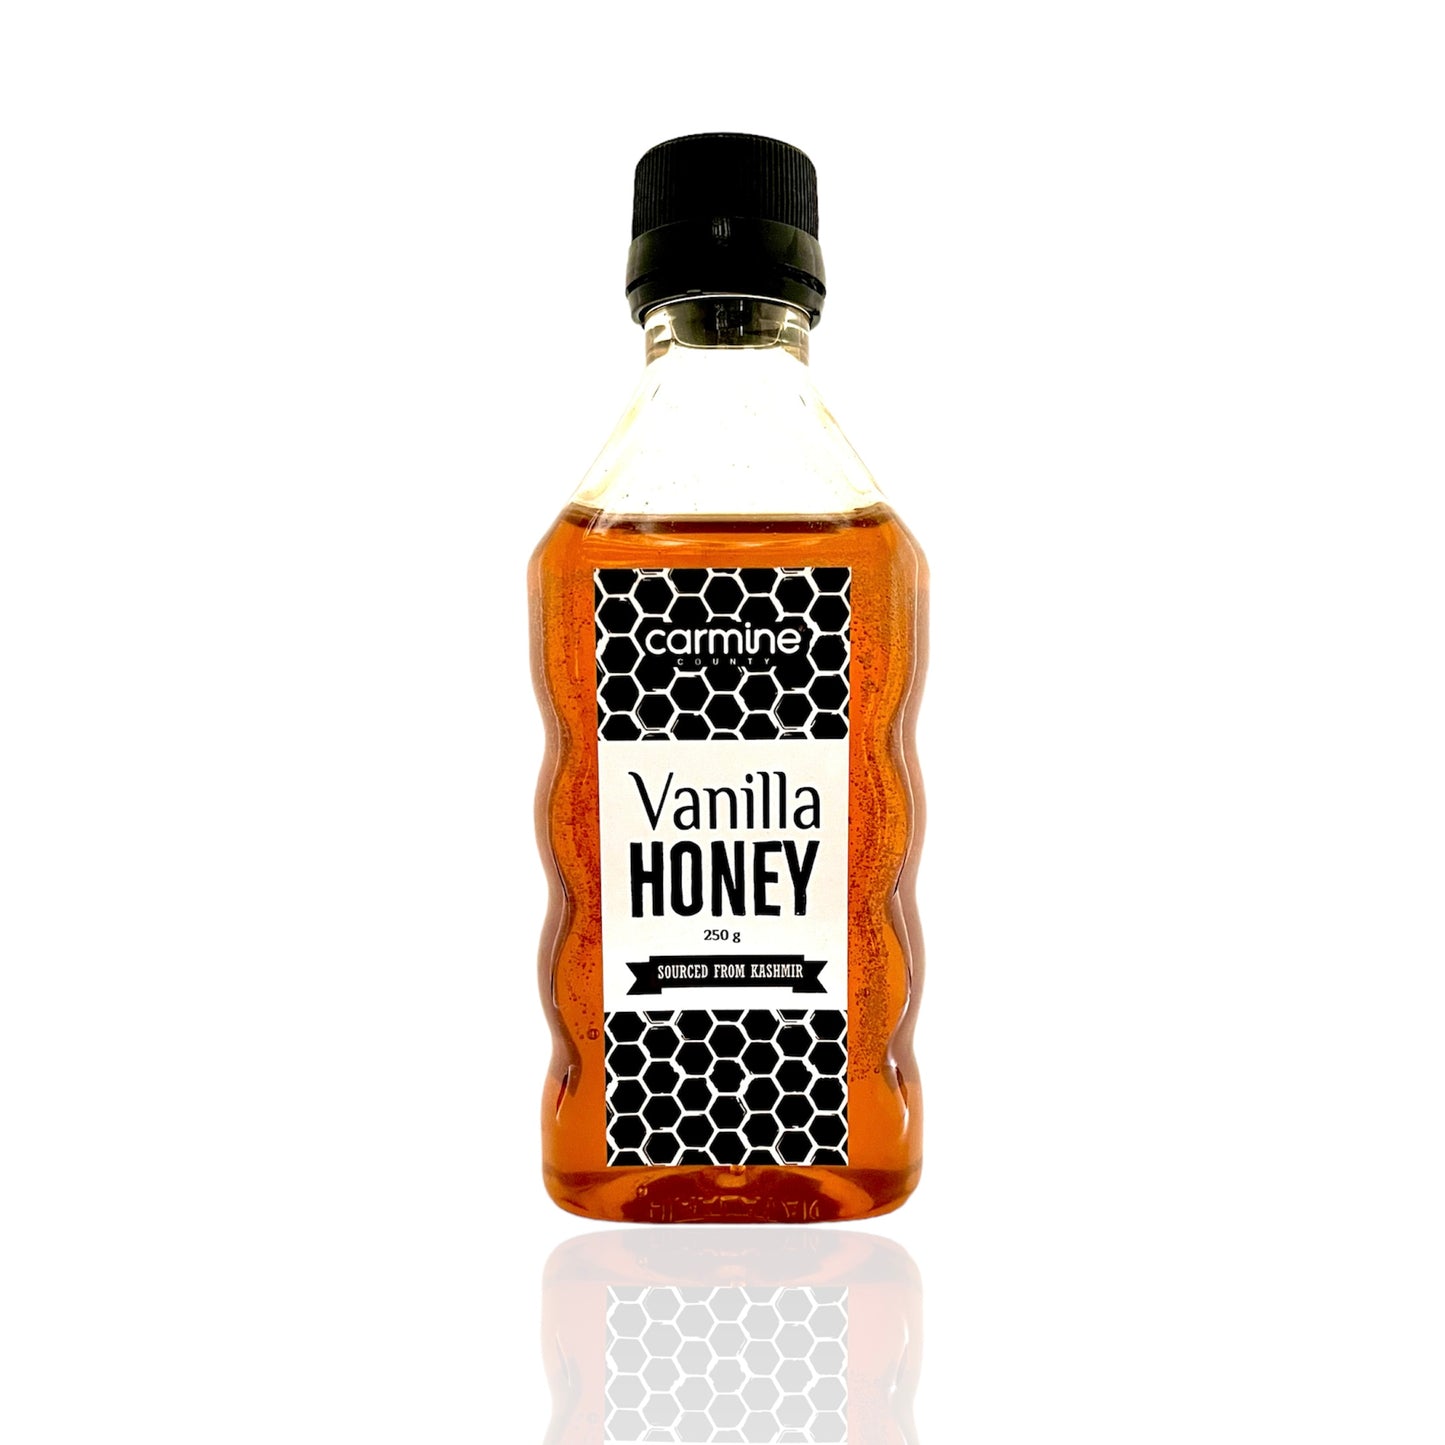 Carmine County All Natural Acacia Honey from Kashmir